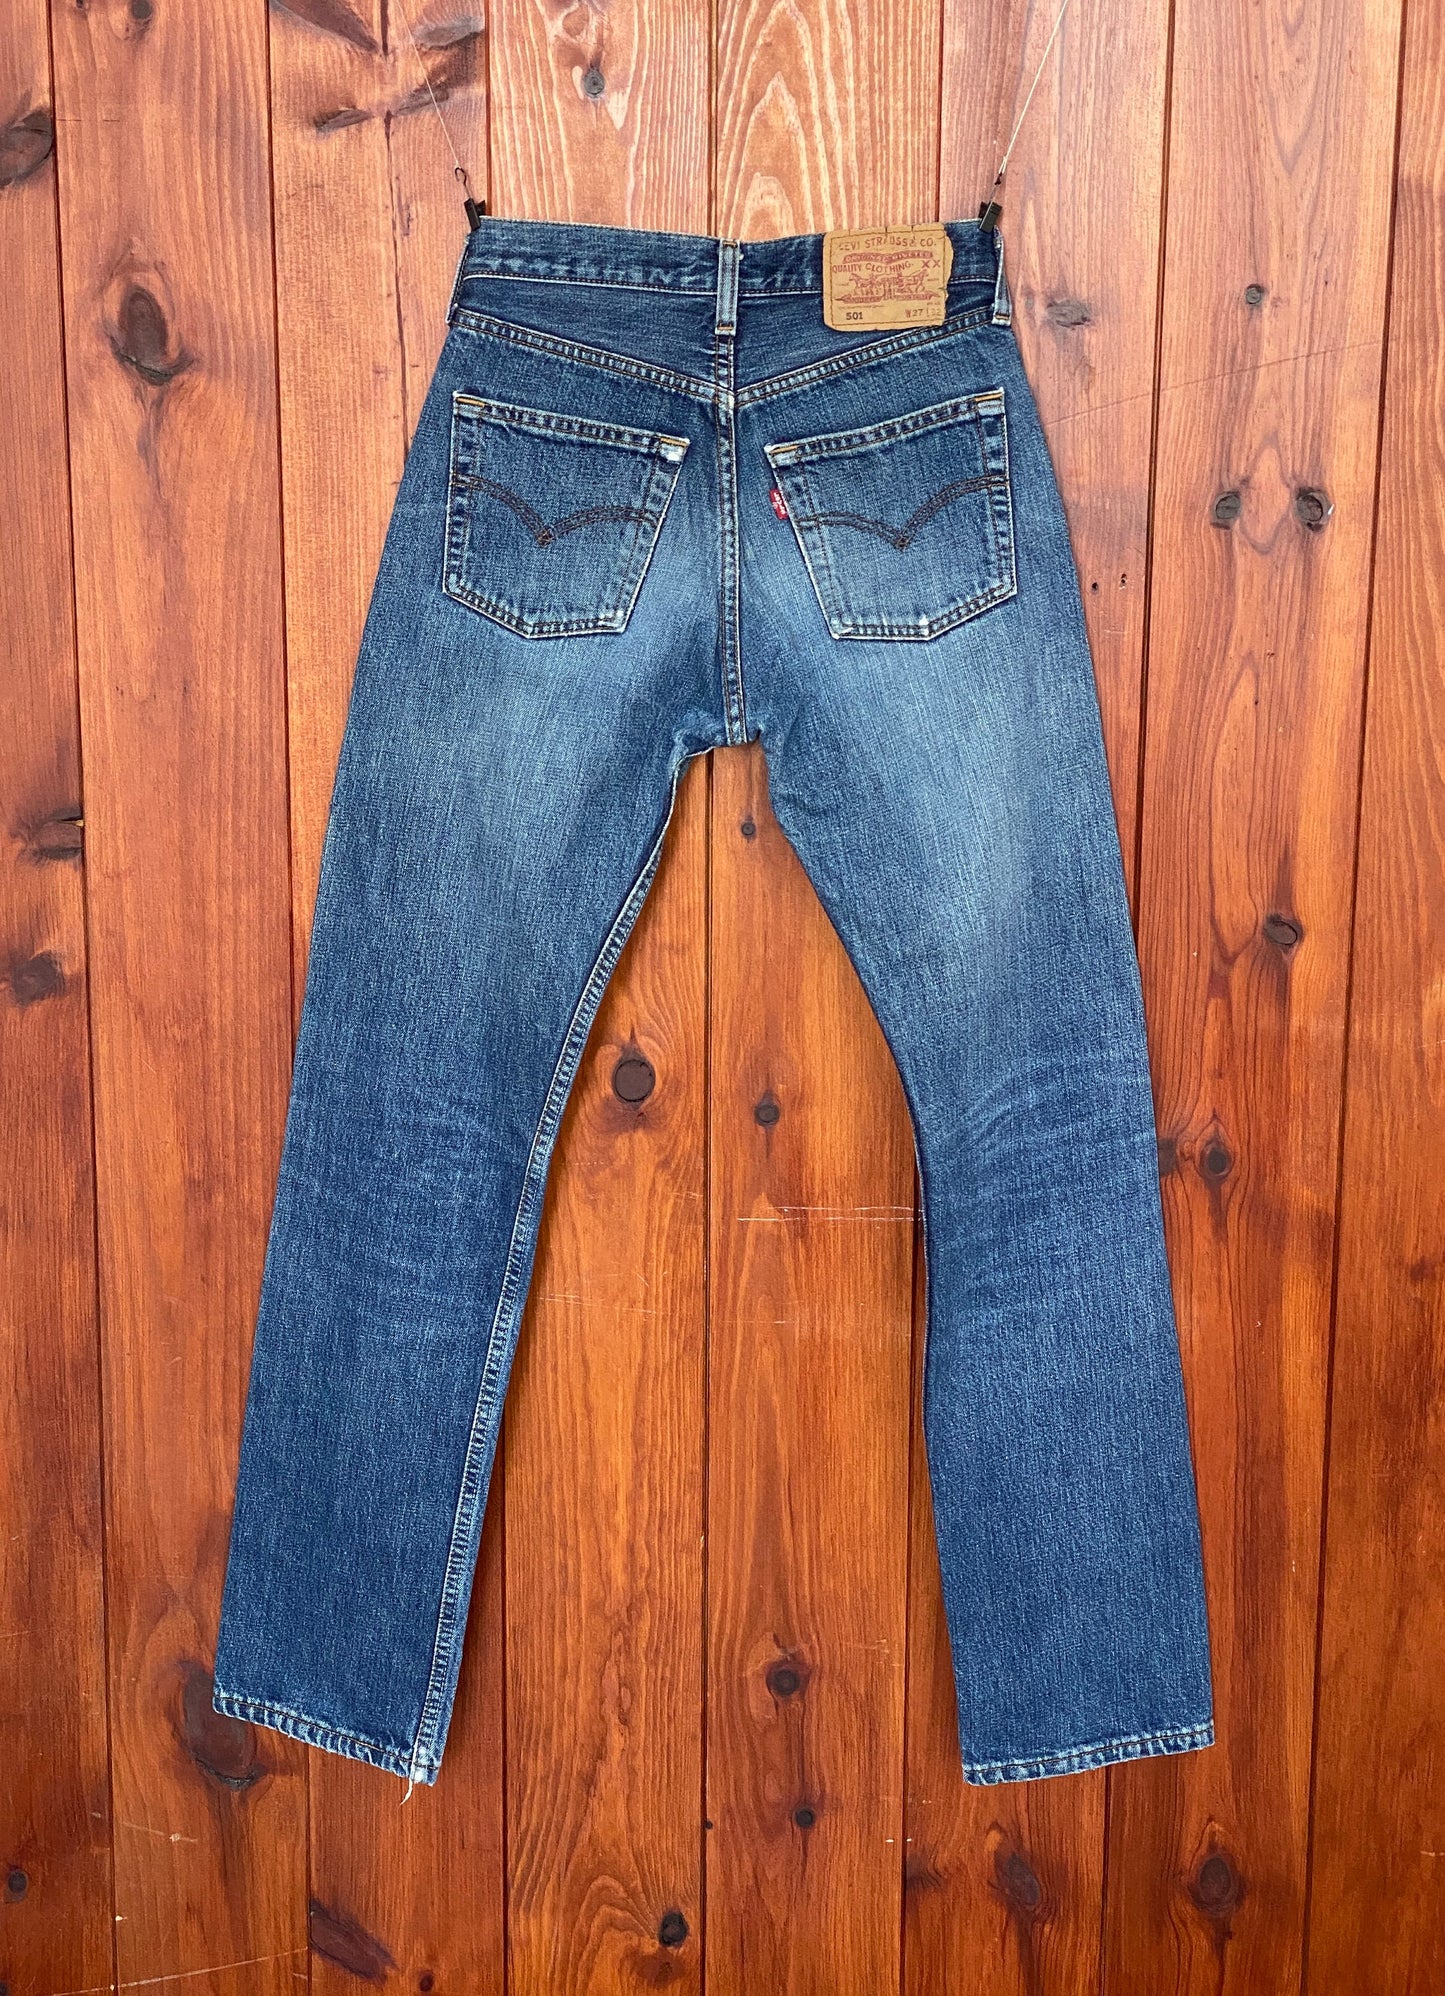 Vintage Levi's 501 Jeans 27X32 - Beautifully Distressed Classic Denim